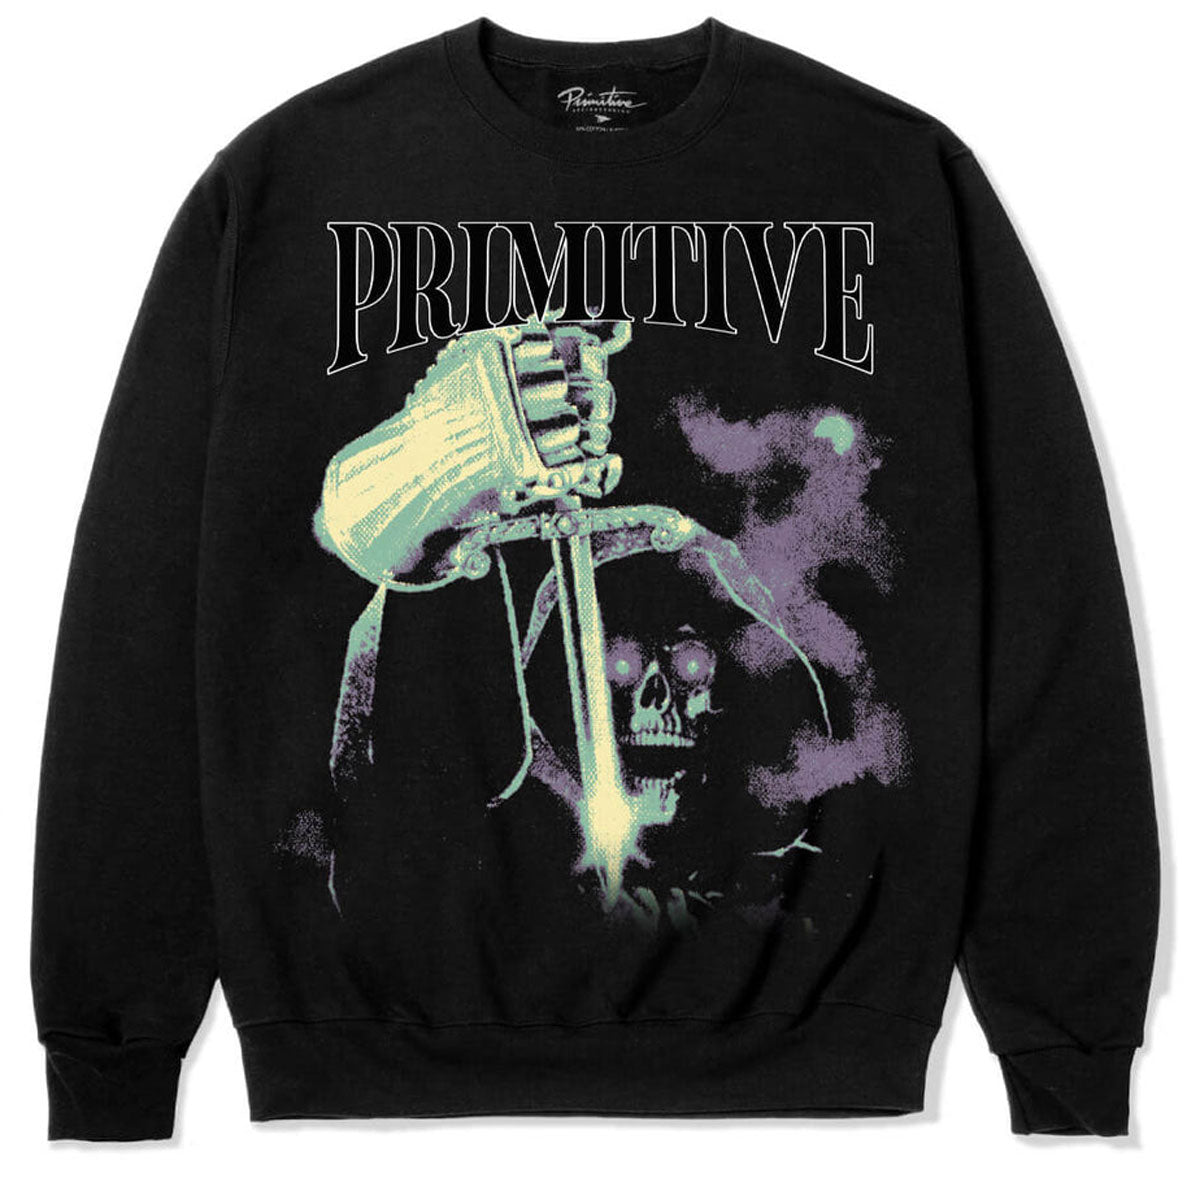 Primitive Tribulation Crewneck Sweatshirt - Black image 1